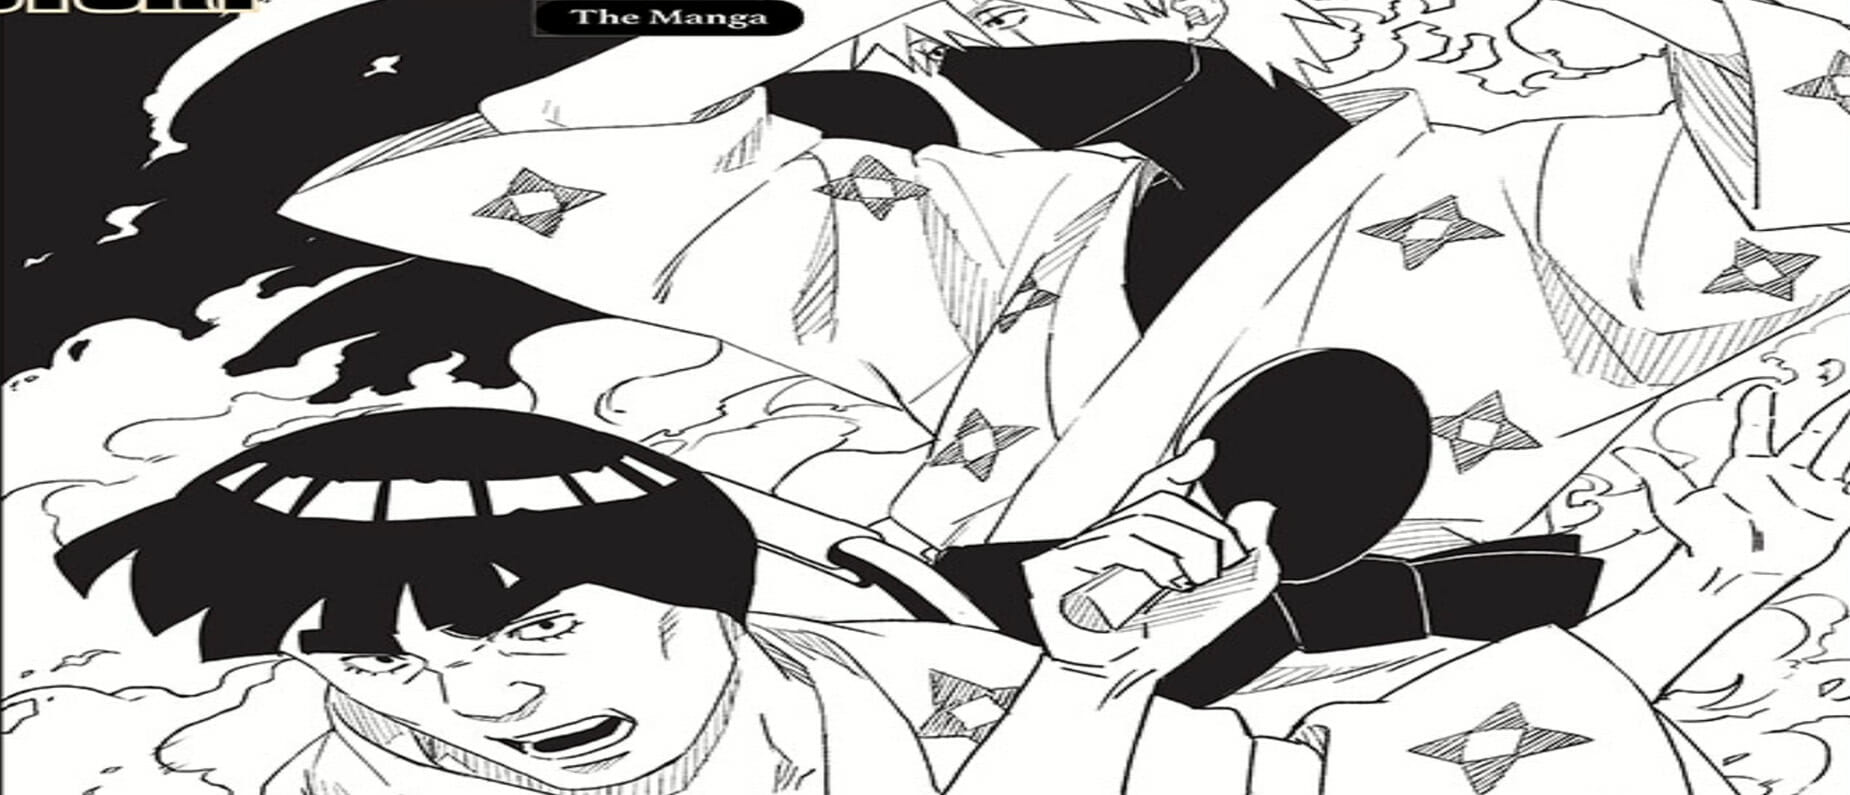 Naruto: Konoha's Story – The Steam Ninja Scrolls Review